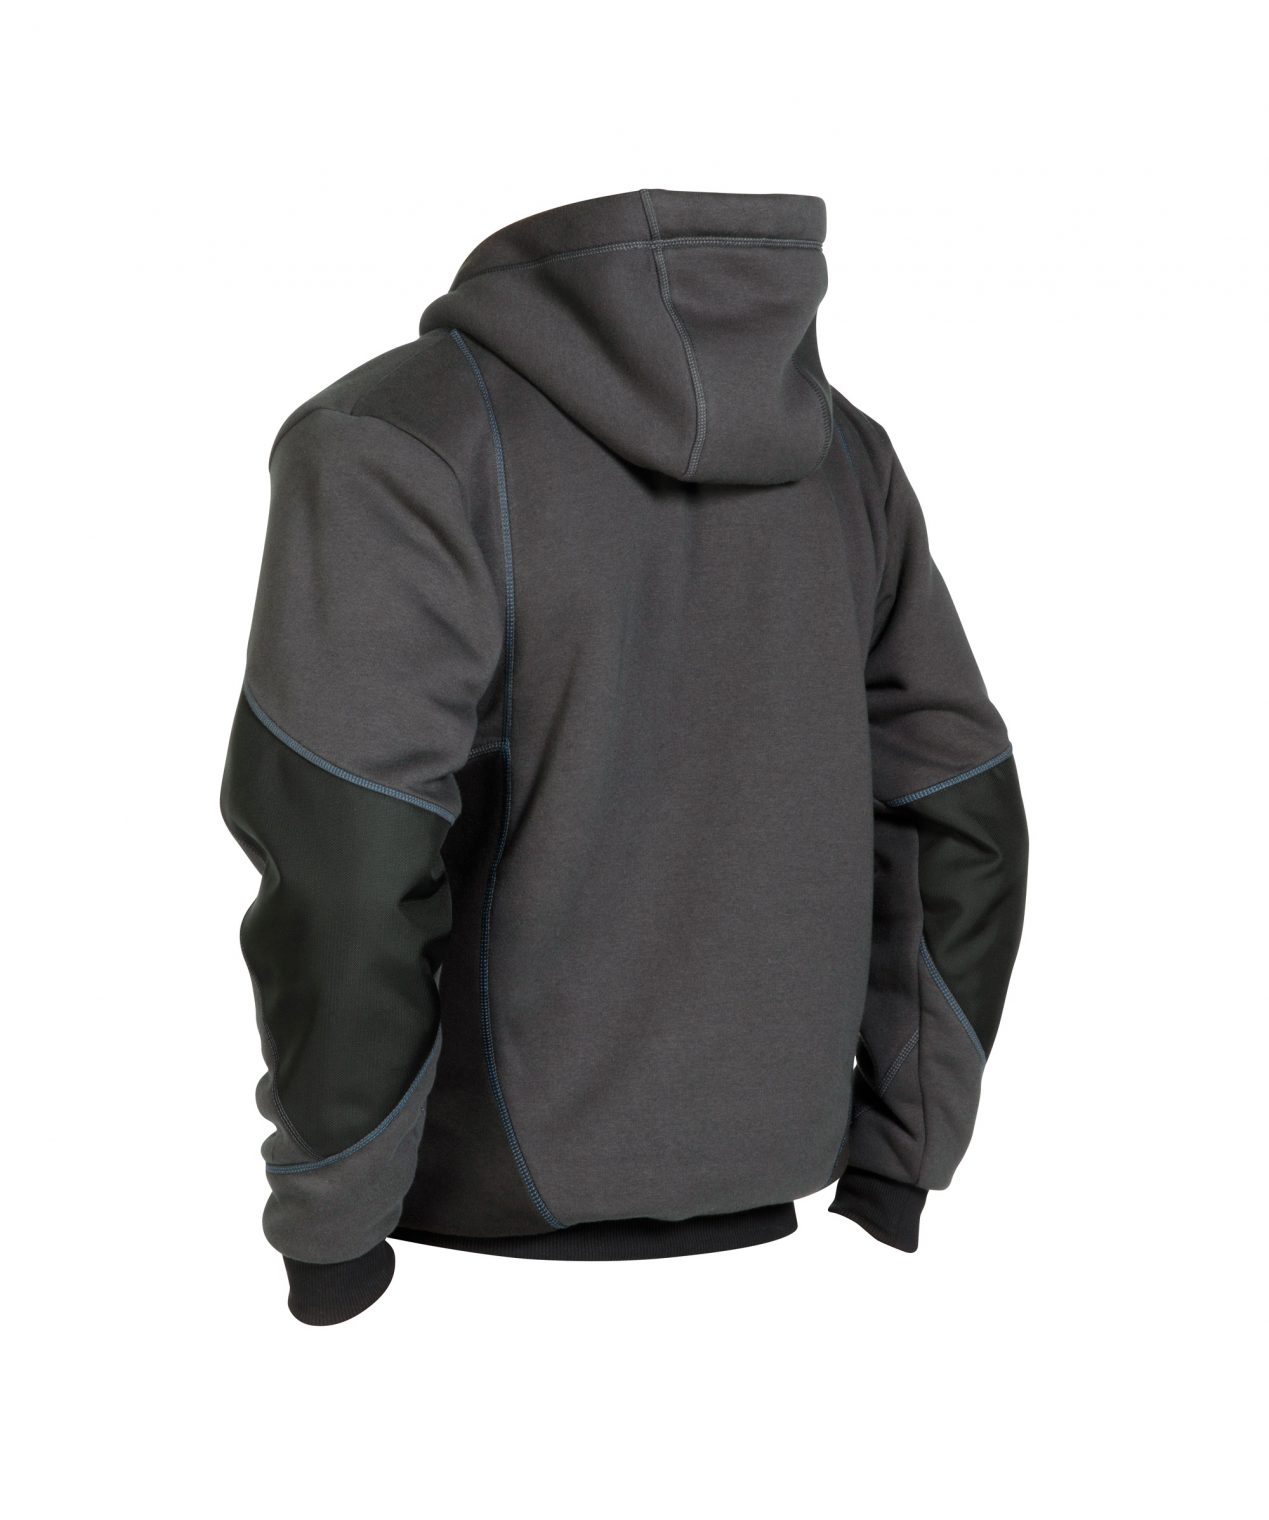 pulse sweatshirt jacket anthracite grey black detail 2